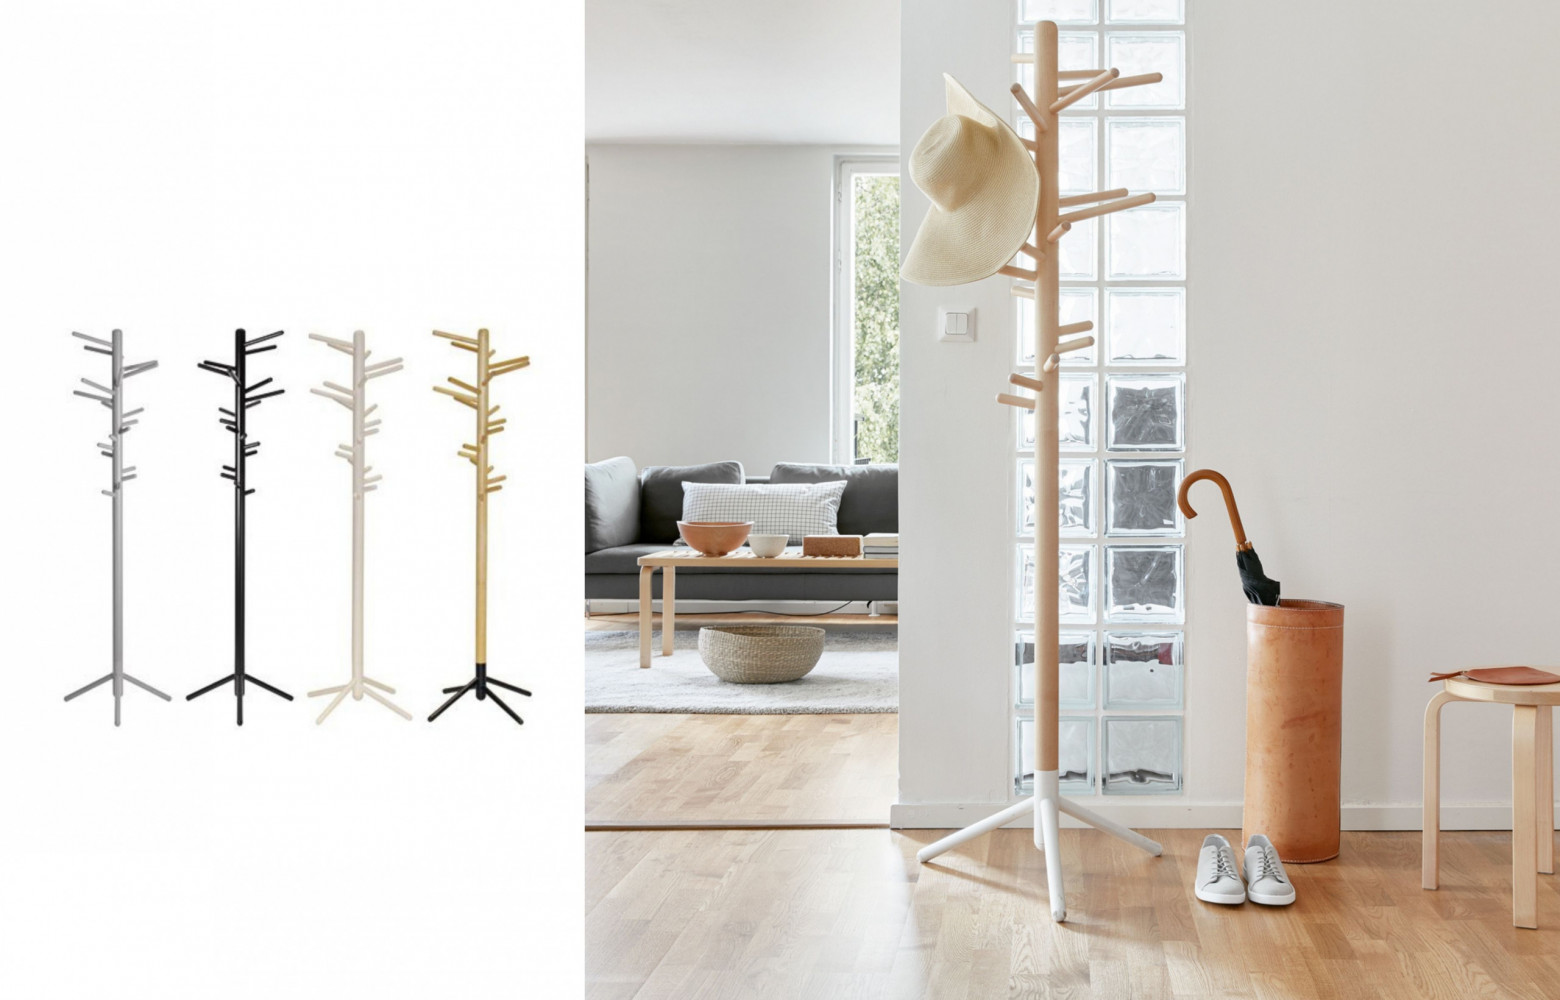 1/ Clothes Tree, en bouleau et en métal, design Anna-Maija Jaatinen, 876 €. Artek sur Silvera.fr